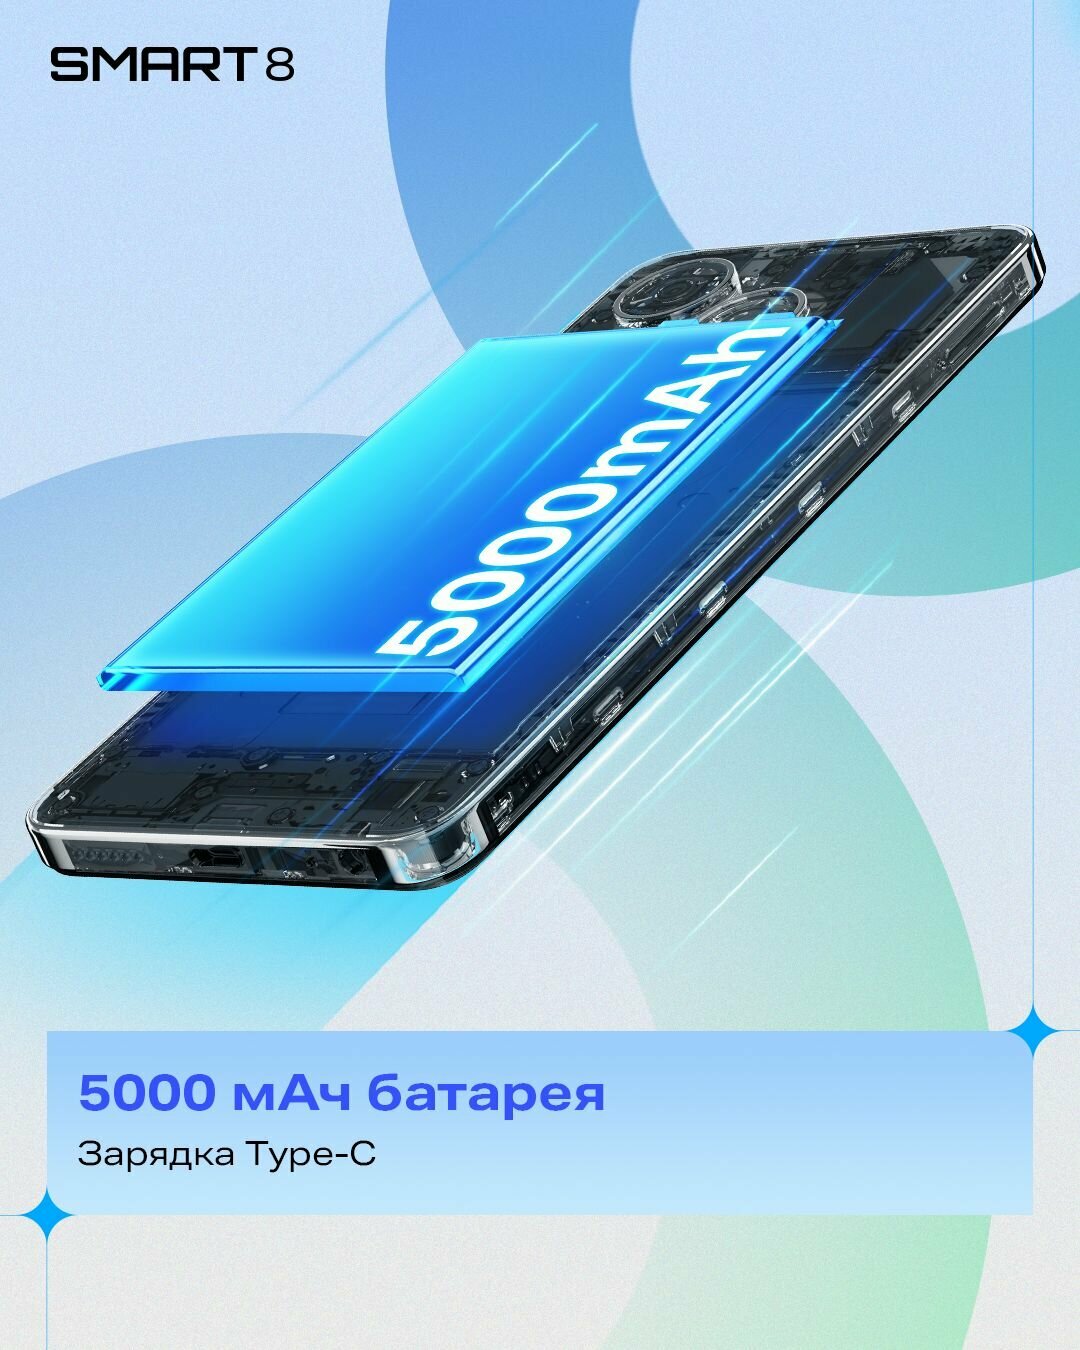 Смартфон Infinix SMART 8 4+128 Galaxy white голубой